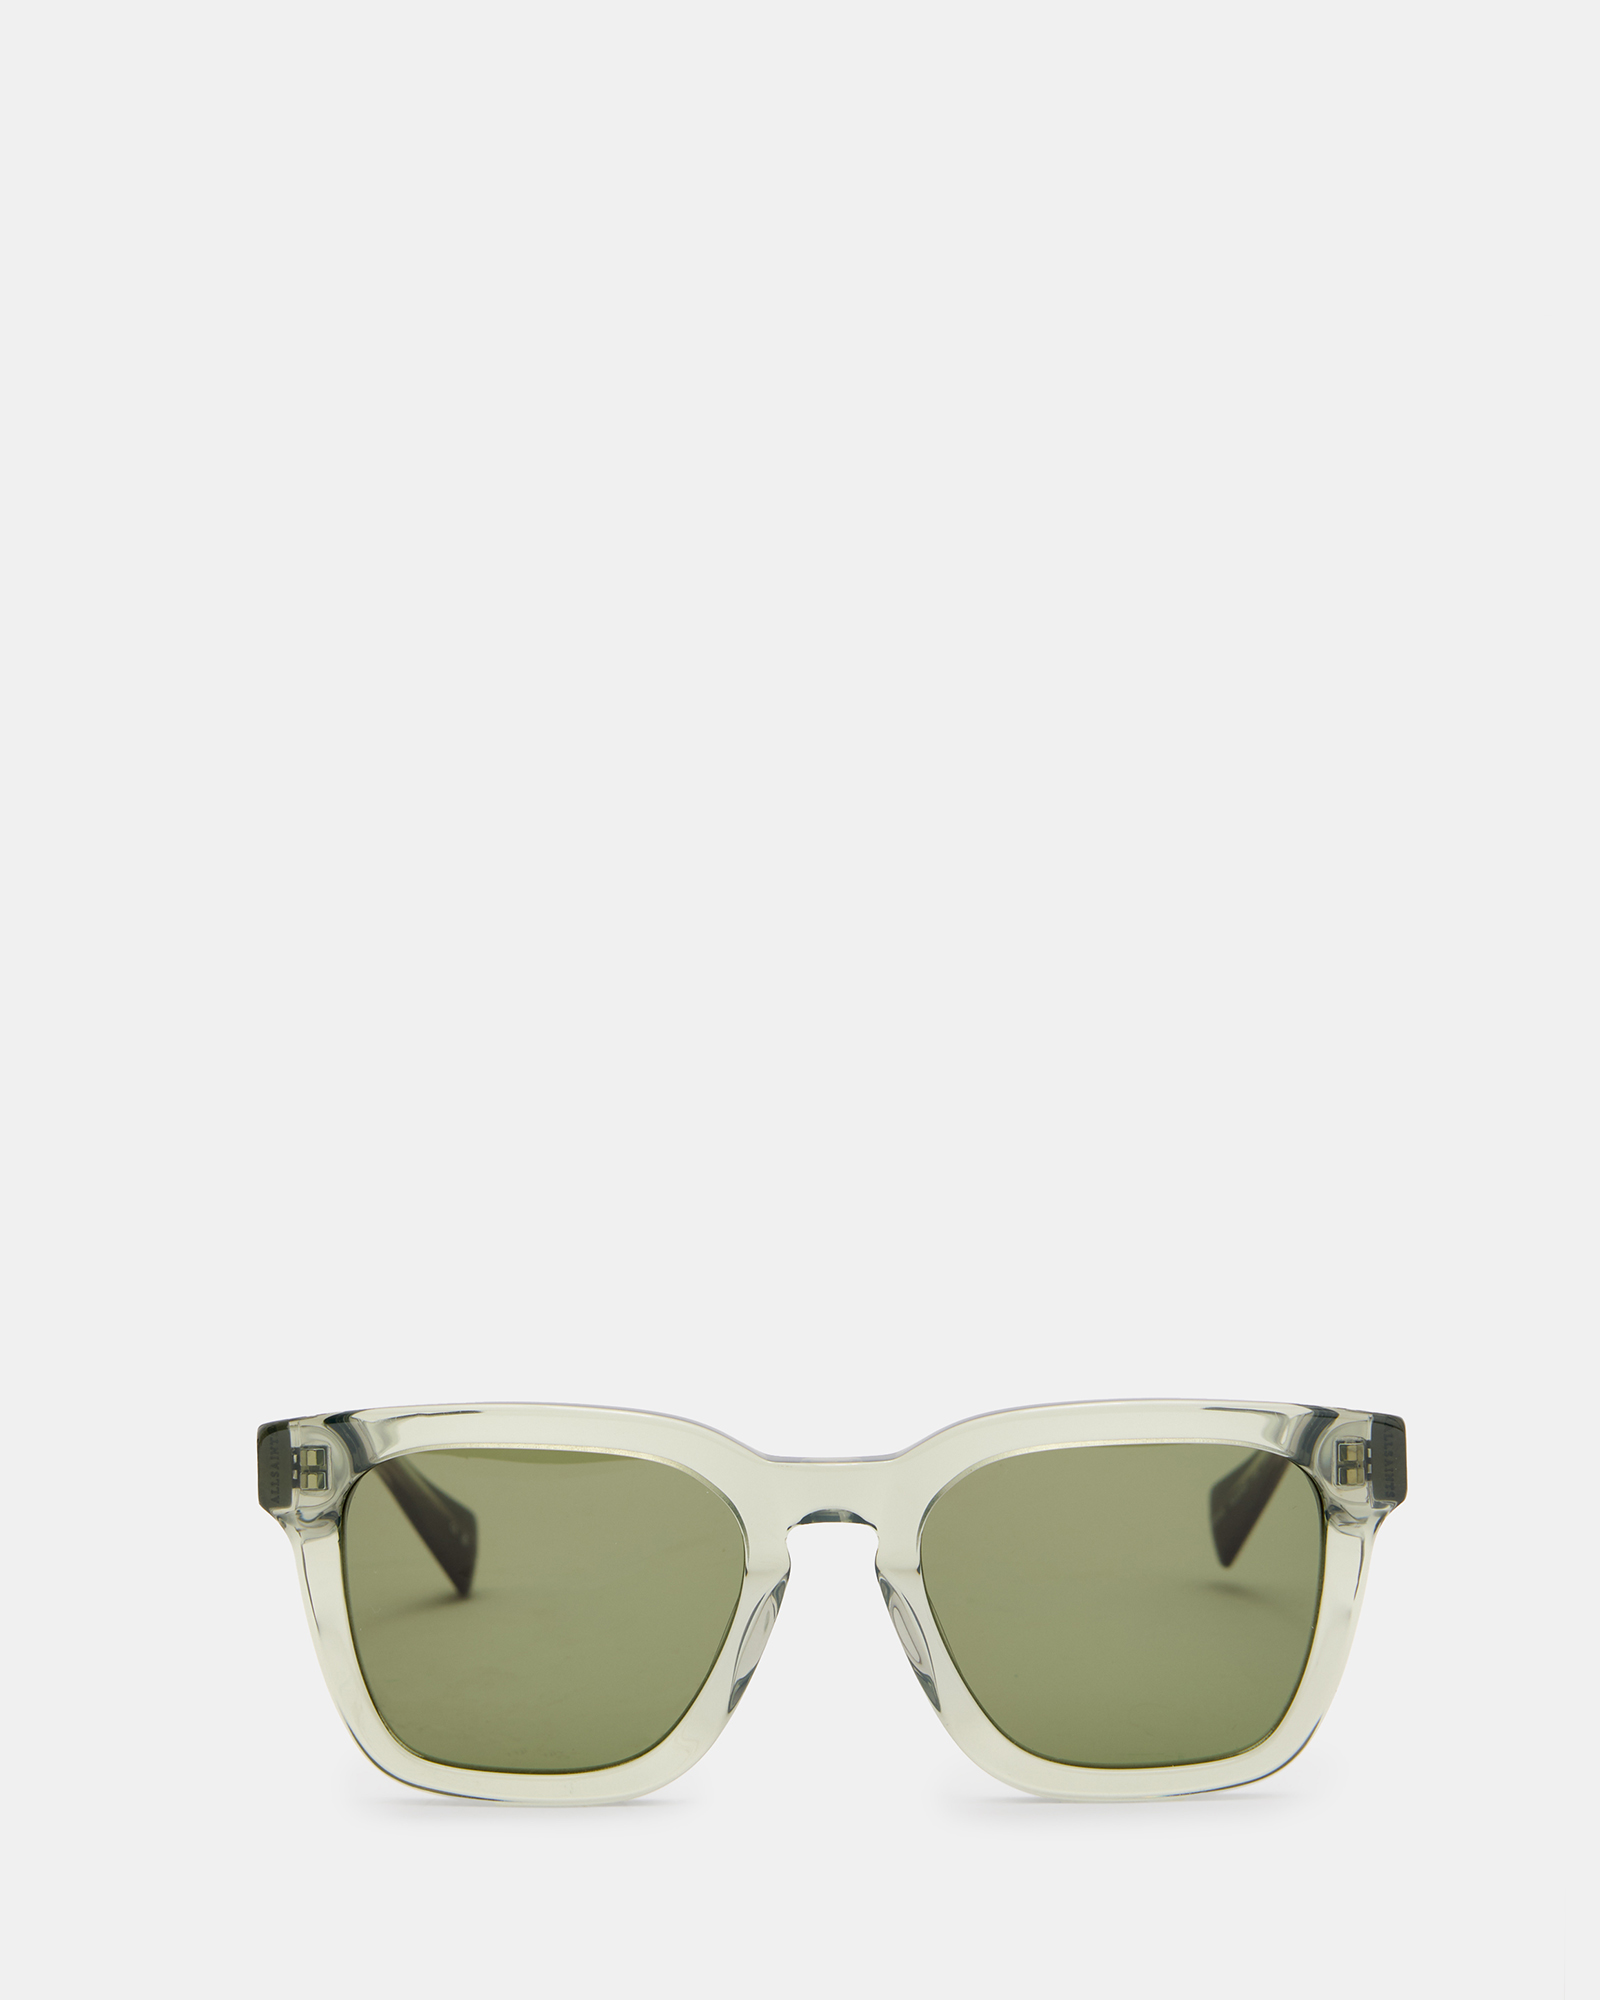 AllSaints Phoenix Square Shaped Sunglasses,, CRYSTAL GREEN